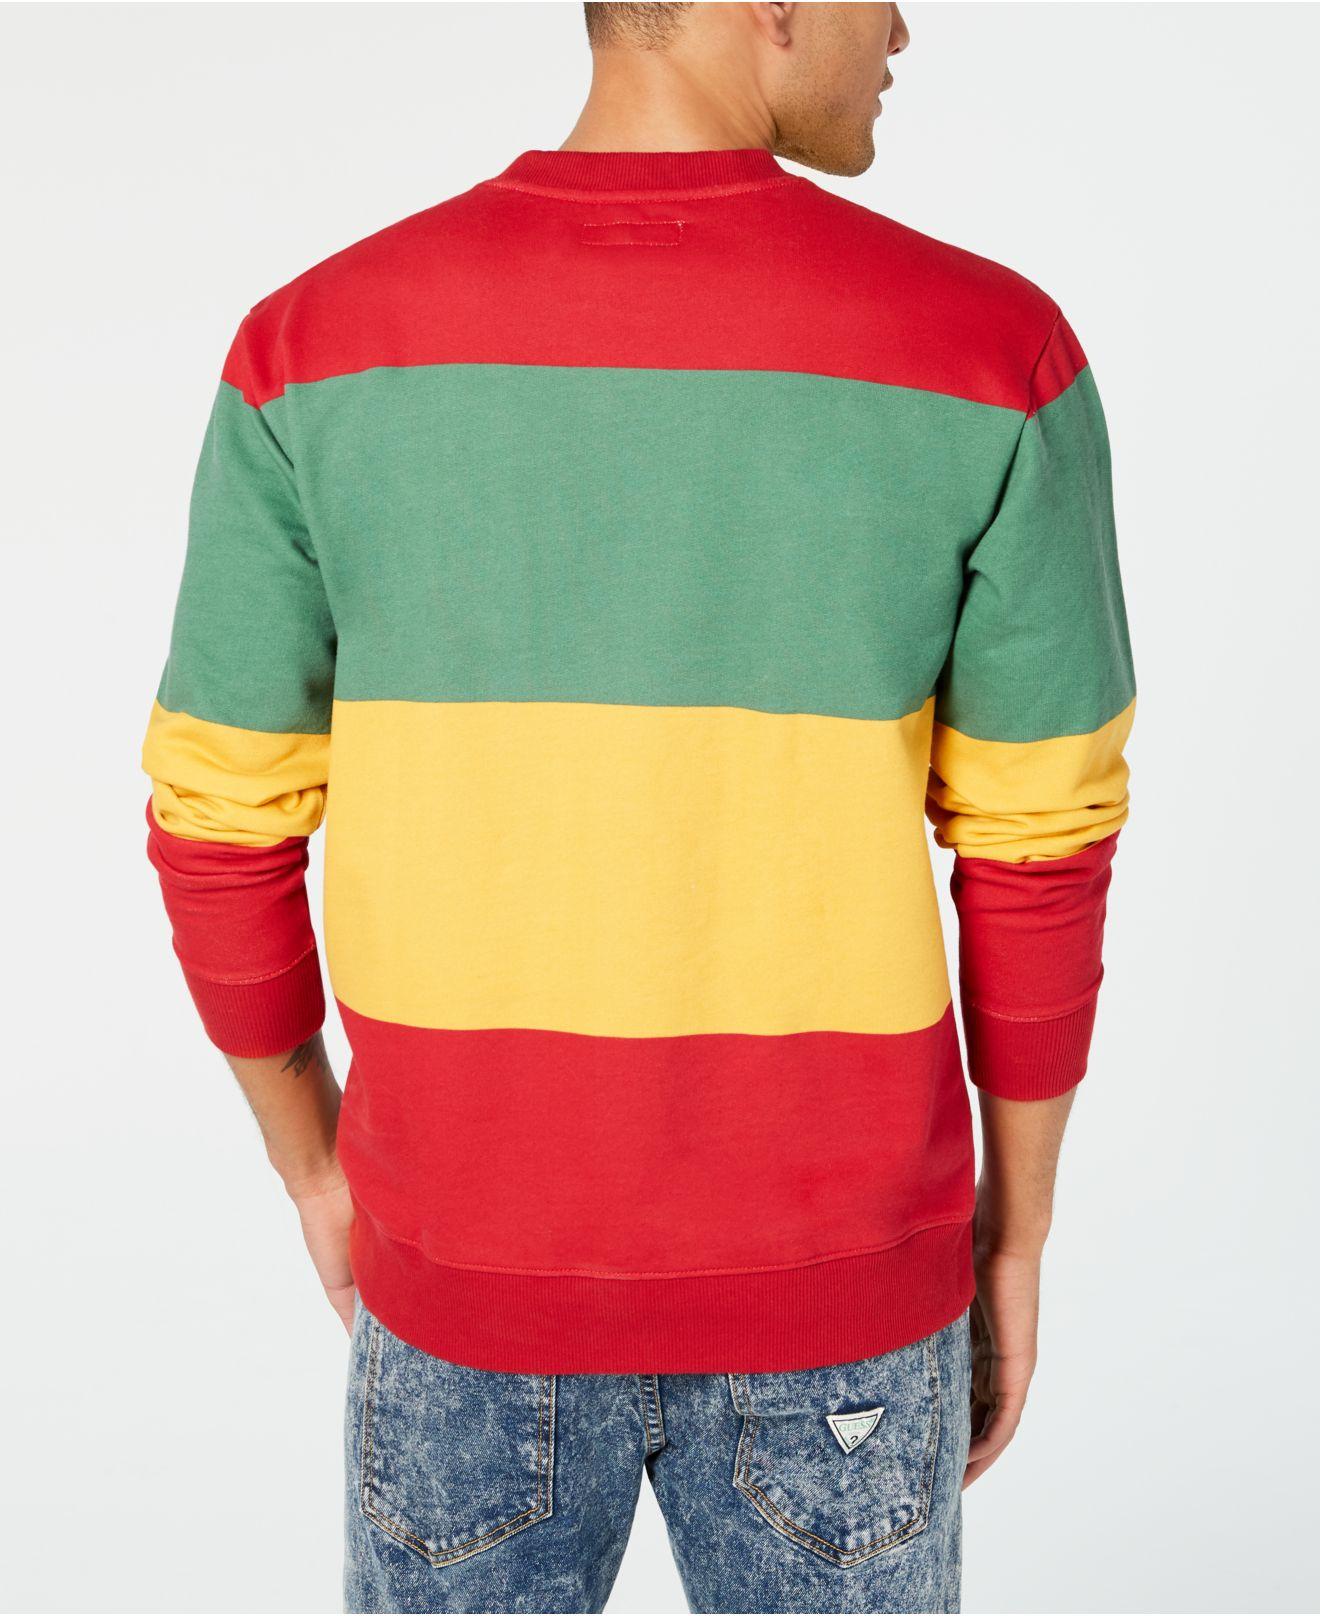 Guess Cotton Go Field Colorblocked Sweatshirt for Men - Lyst